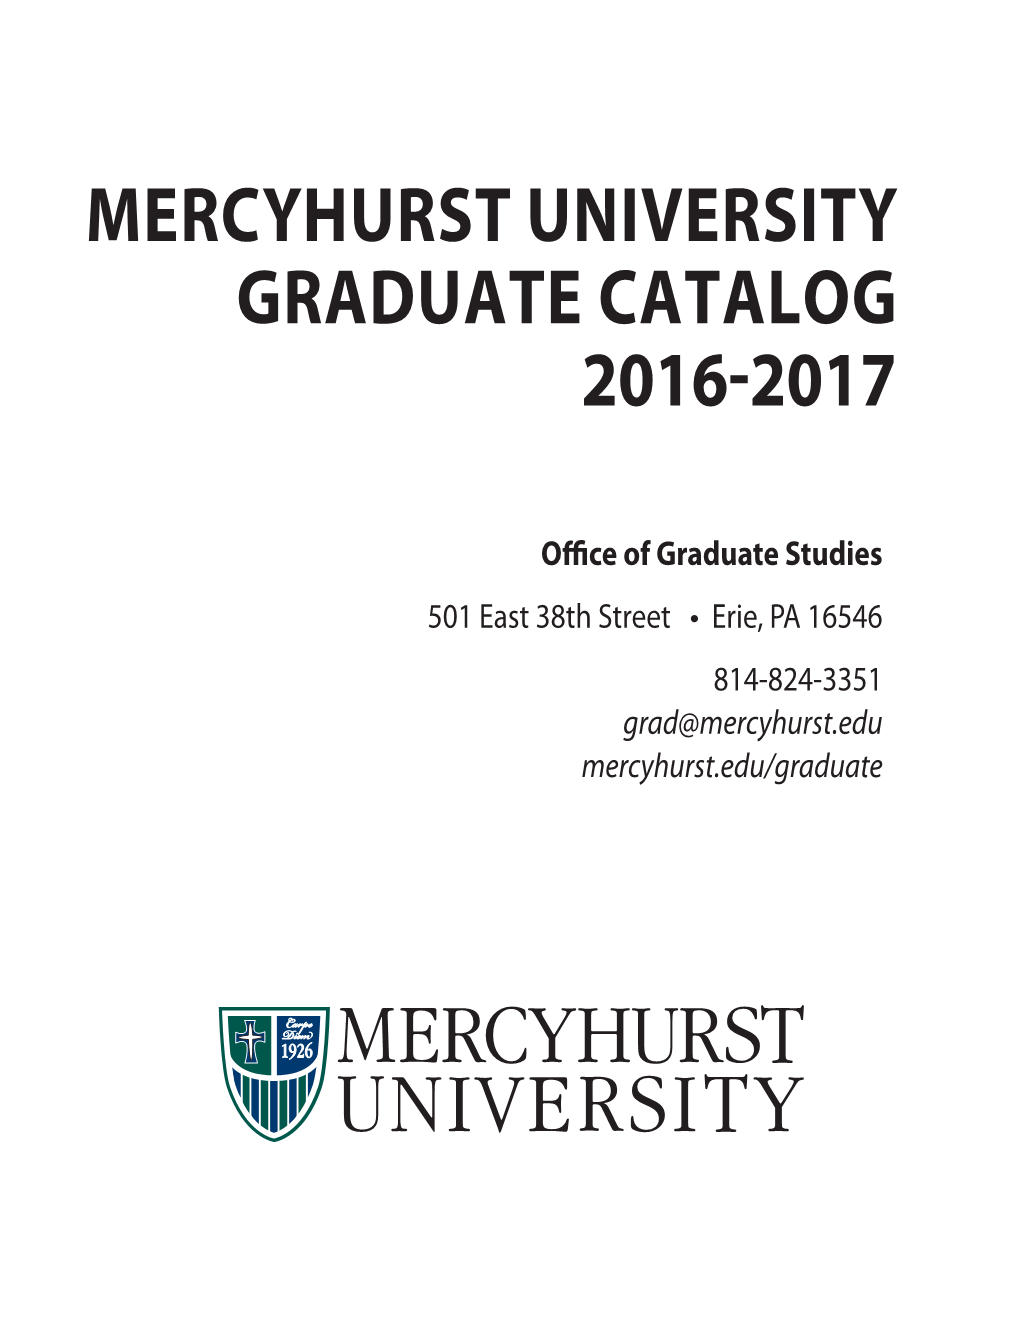 Mercyhurst University Graduate Catalog 2016-2017